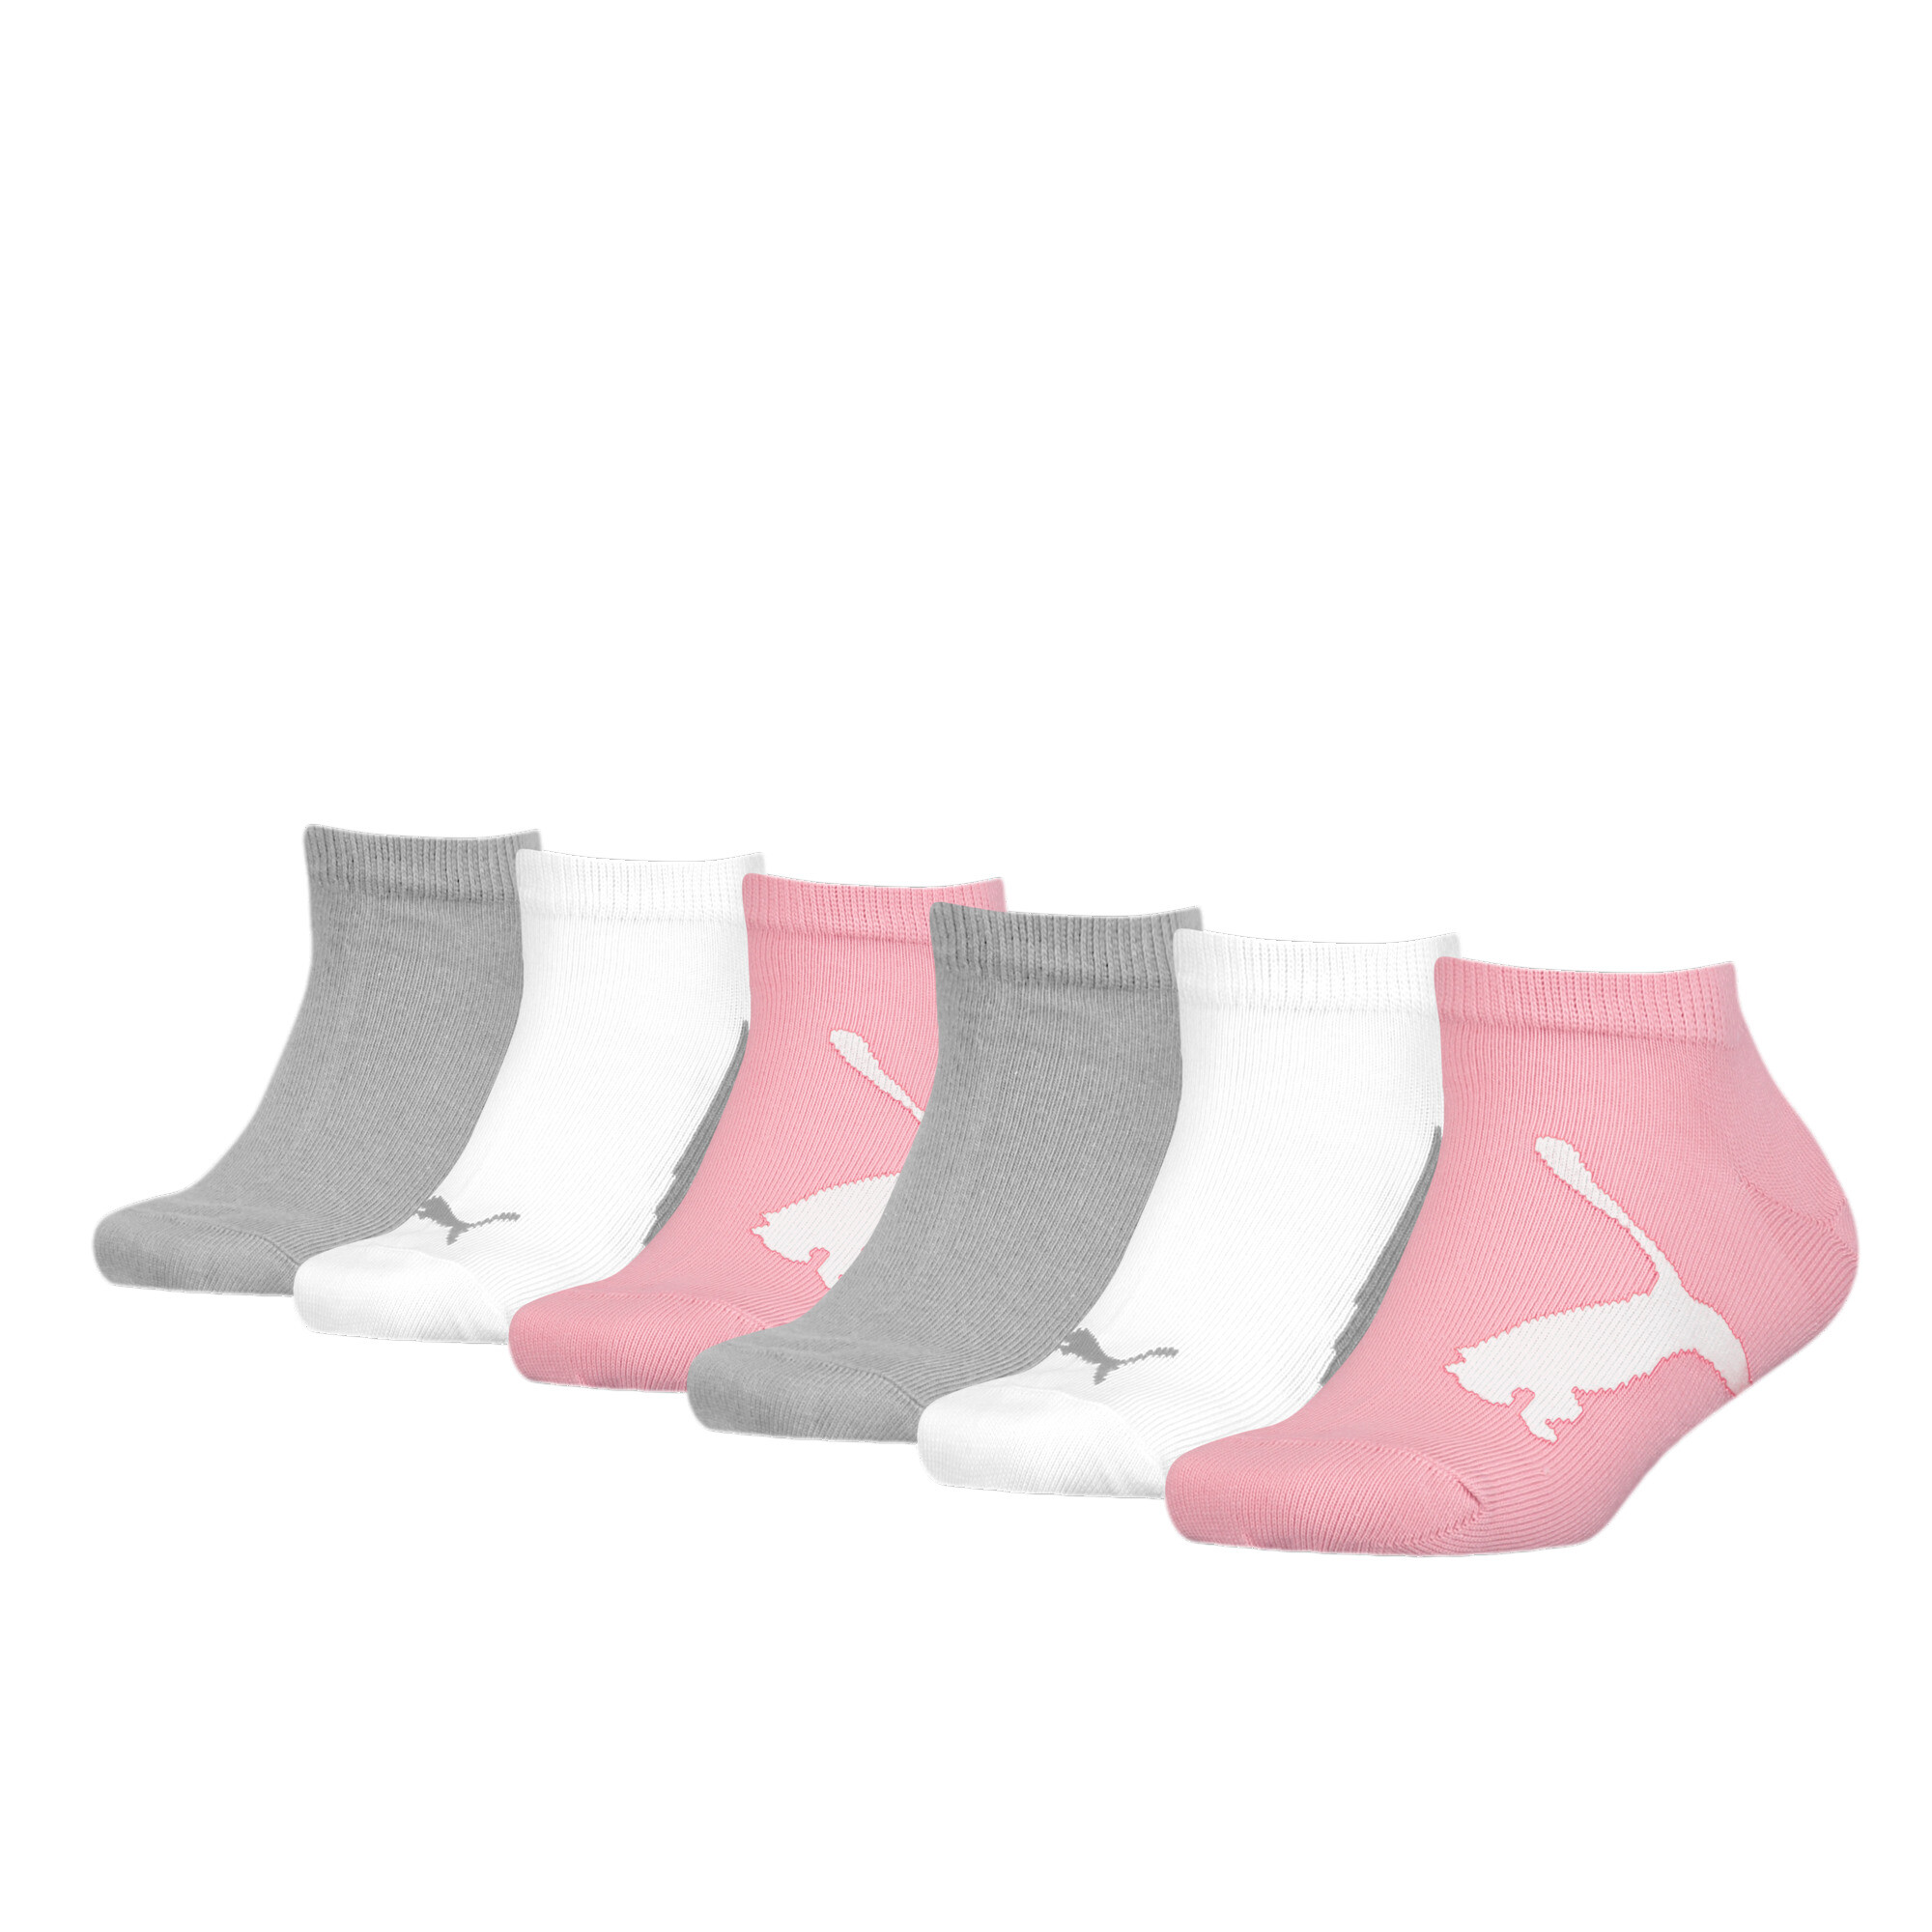 Puma Kids BWT Sneaker Socks 6 Pack, Pink, Size 39-42, Clothing